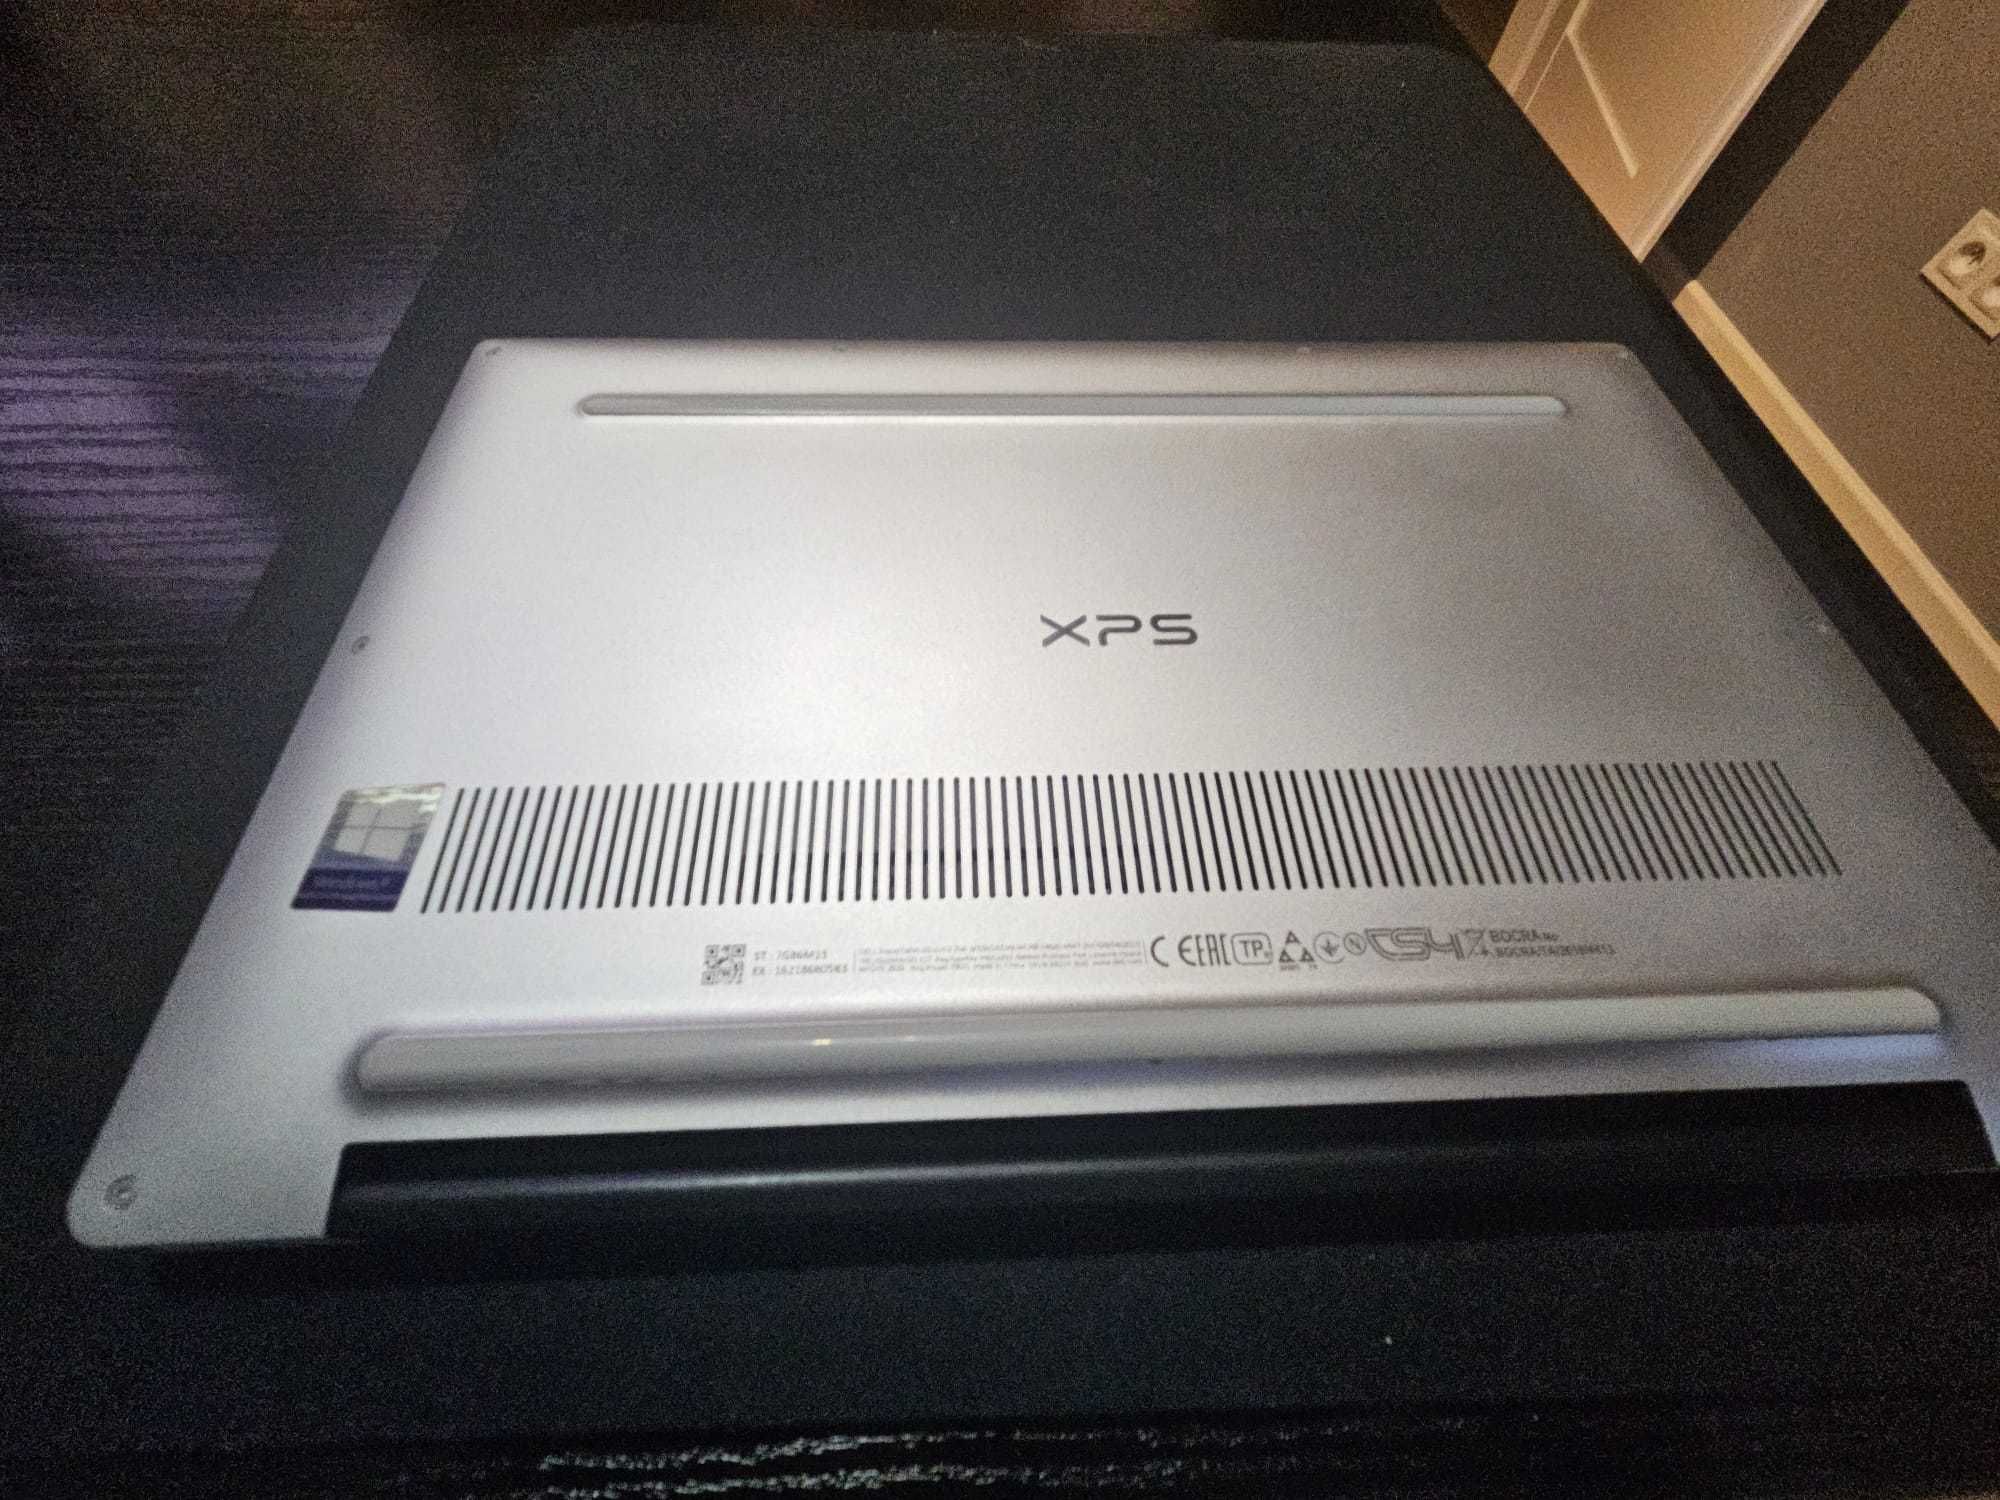 Laptop Dell XPS 13 - 7390